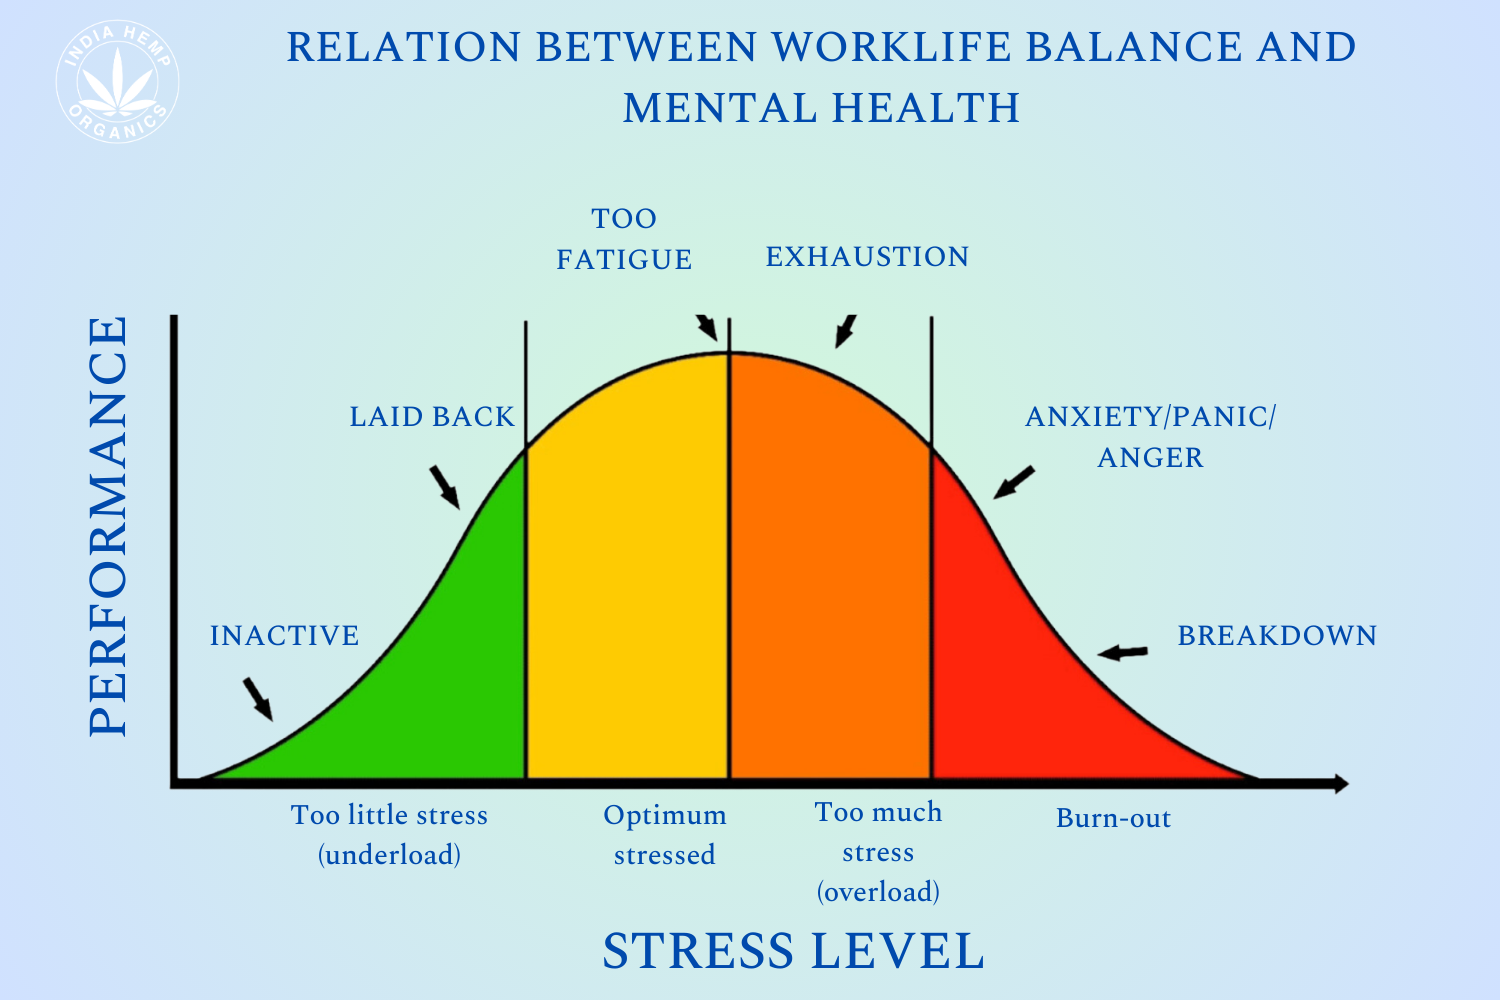 Worklife Balance and Stress